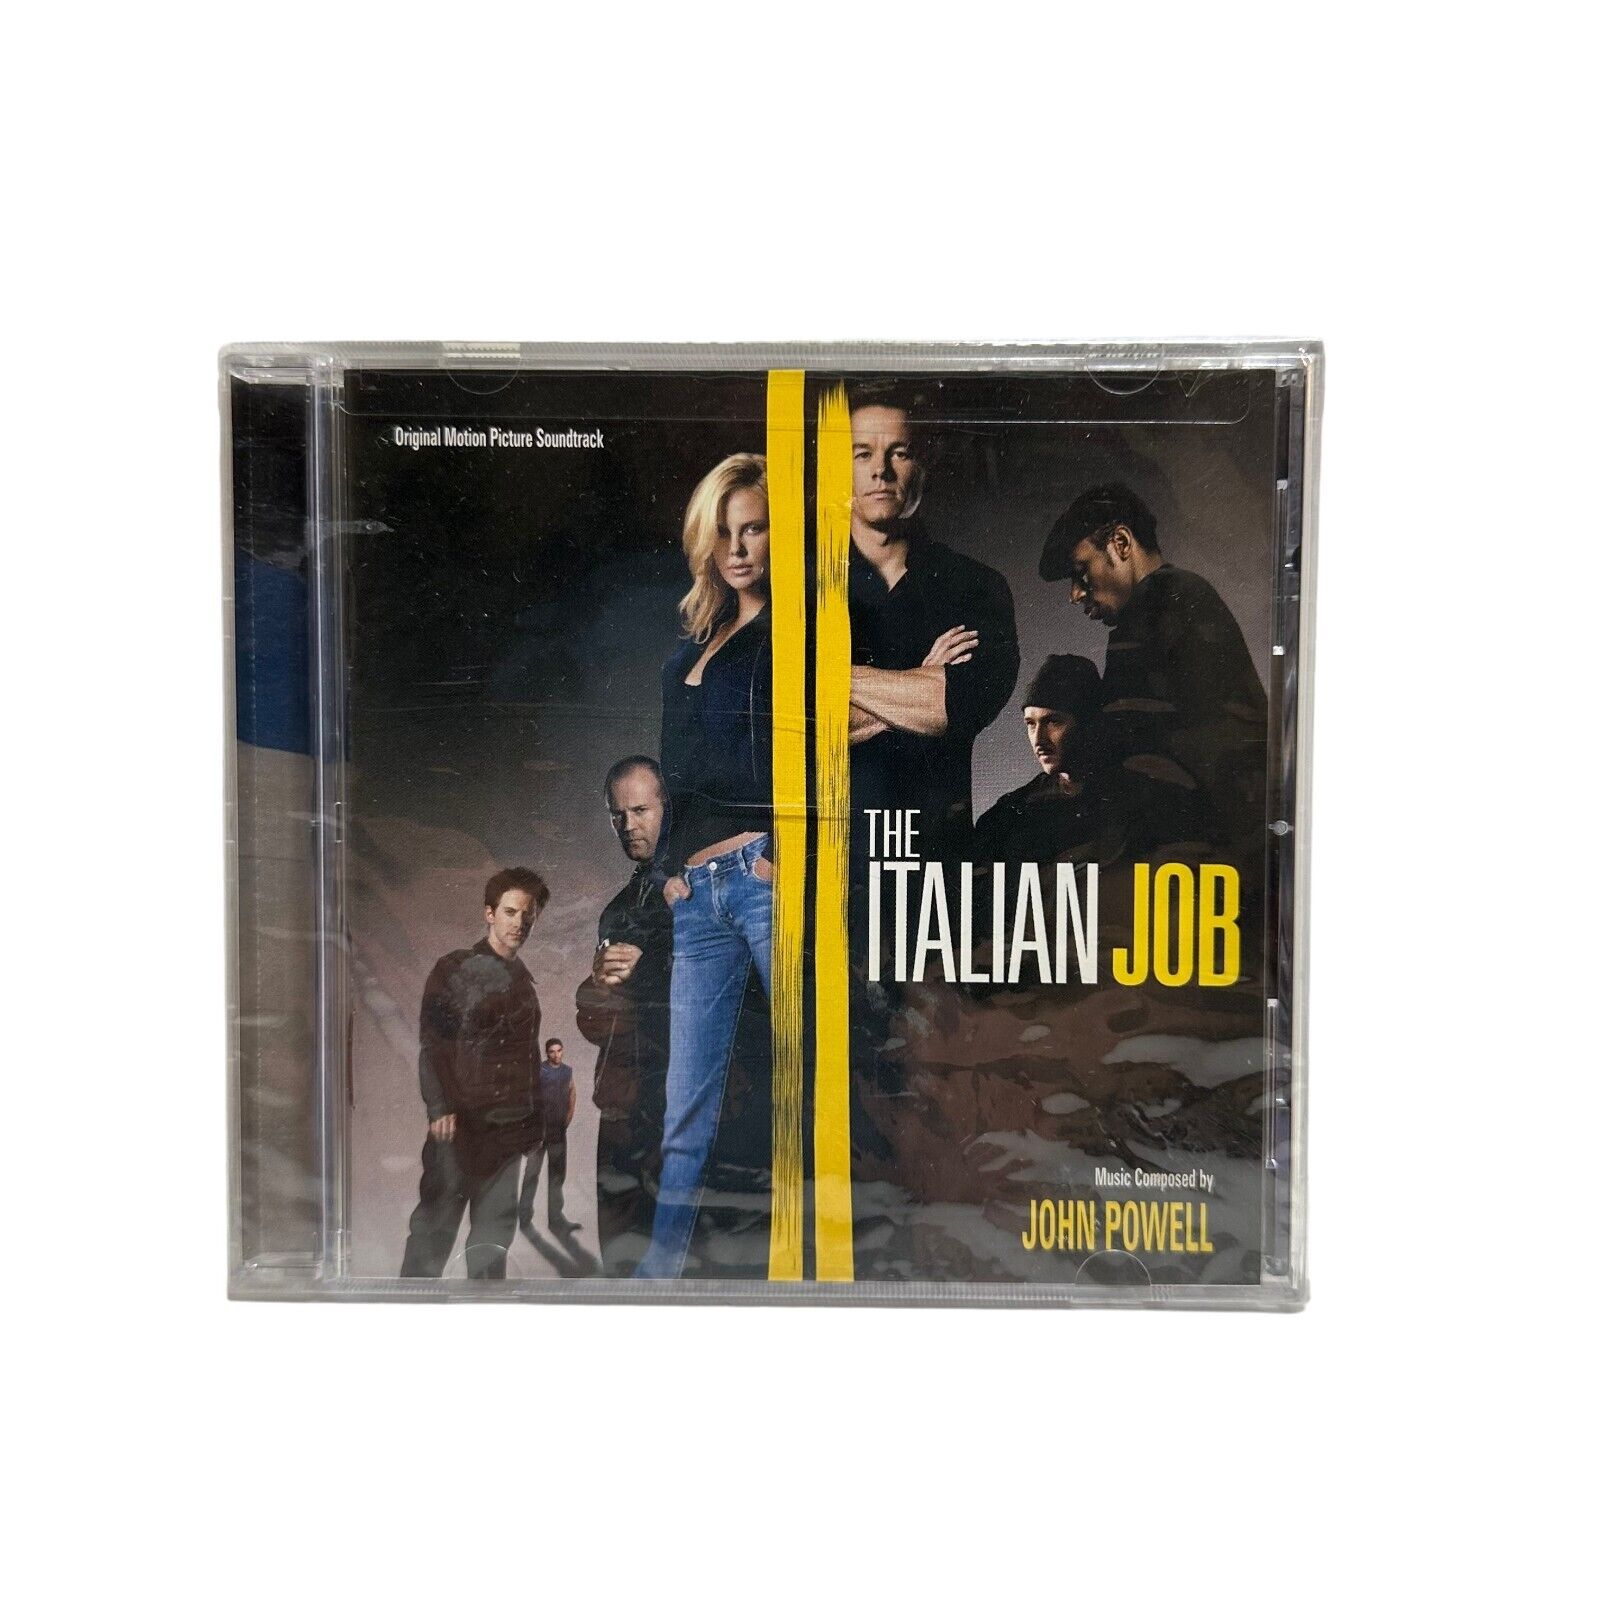 The Italian Job Soundtrack CD 2003